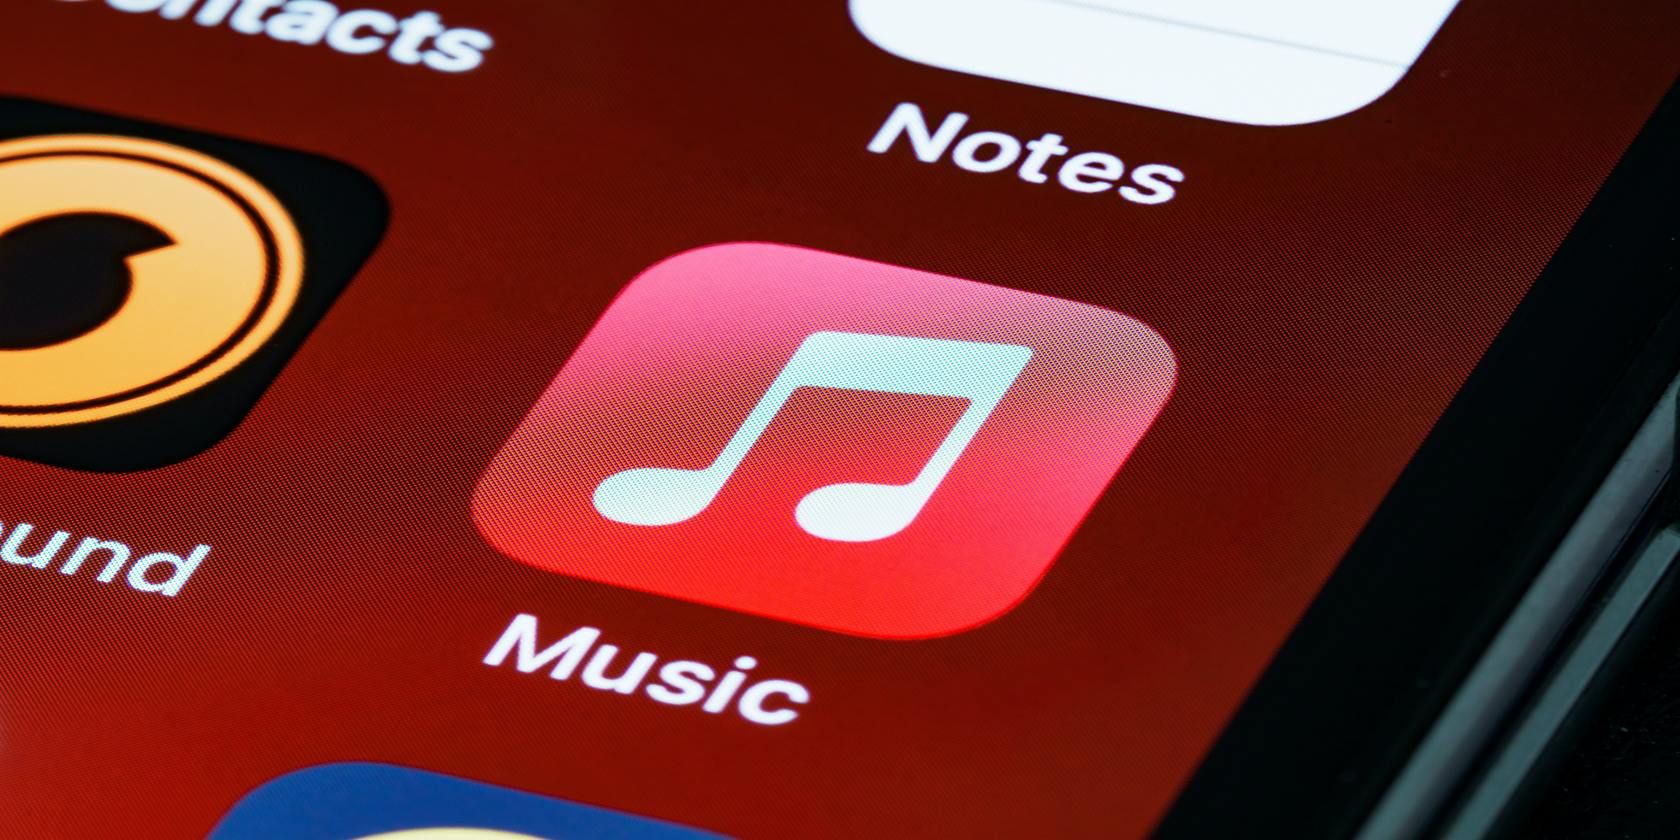 download apple music